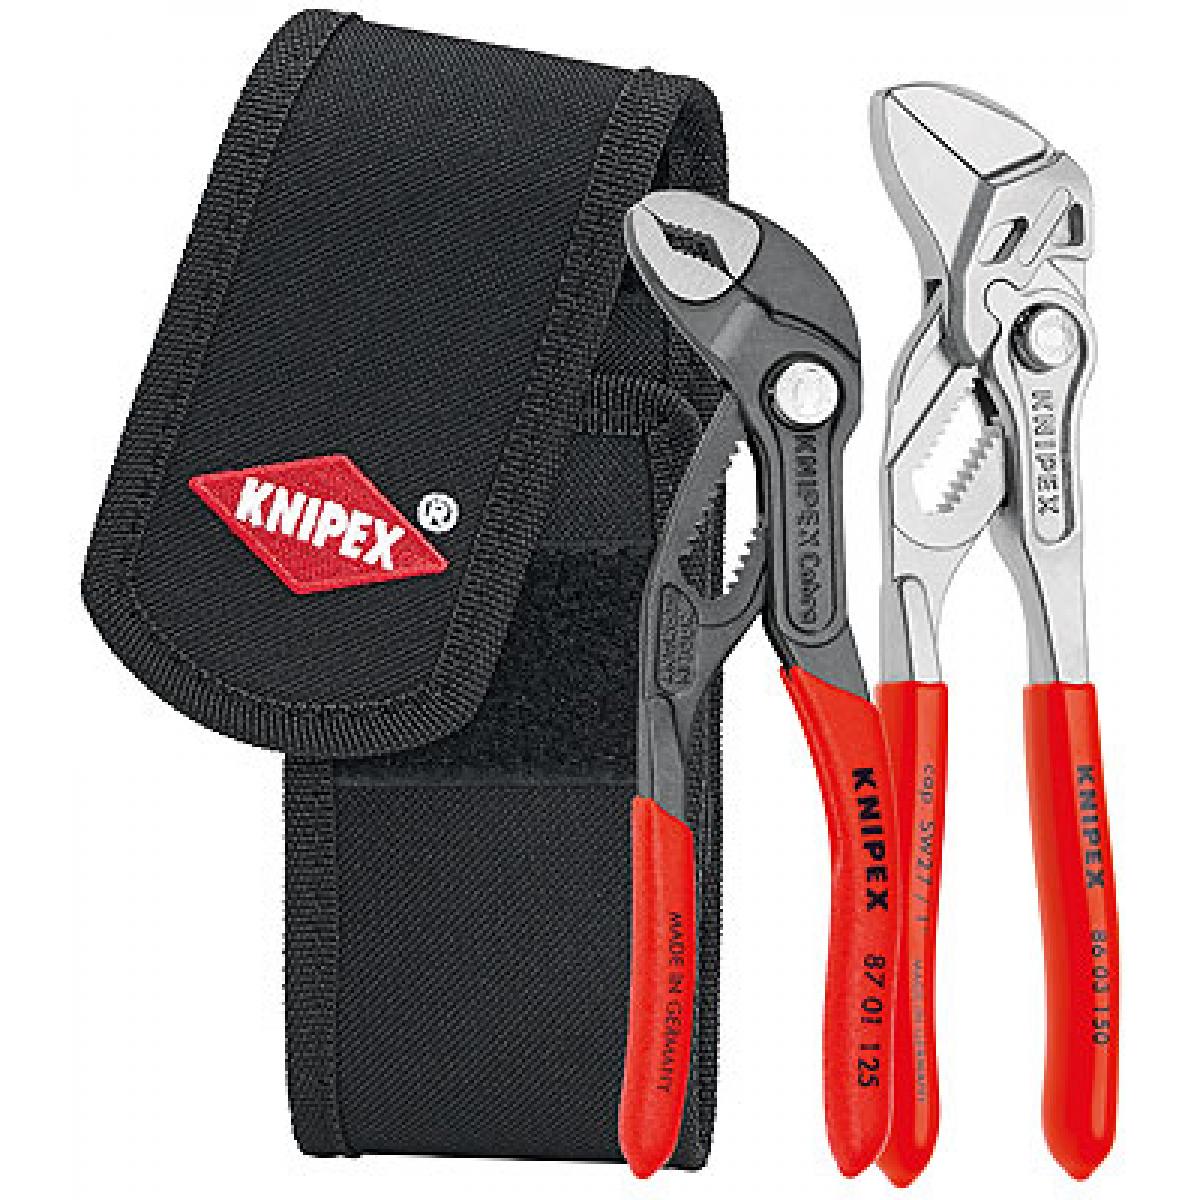 Knipex cobra купить. Knipex KN 8701125. Набор Knipex KN-002072v01. Набор переставных ключей Knipex KN-002072v01. Knipex KN-001972le.